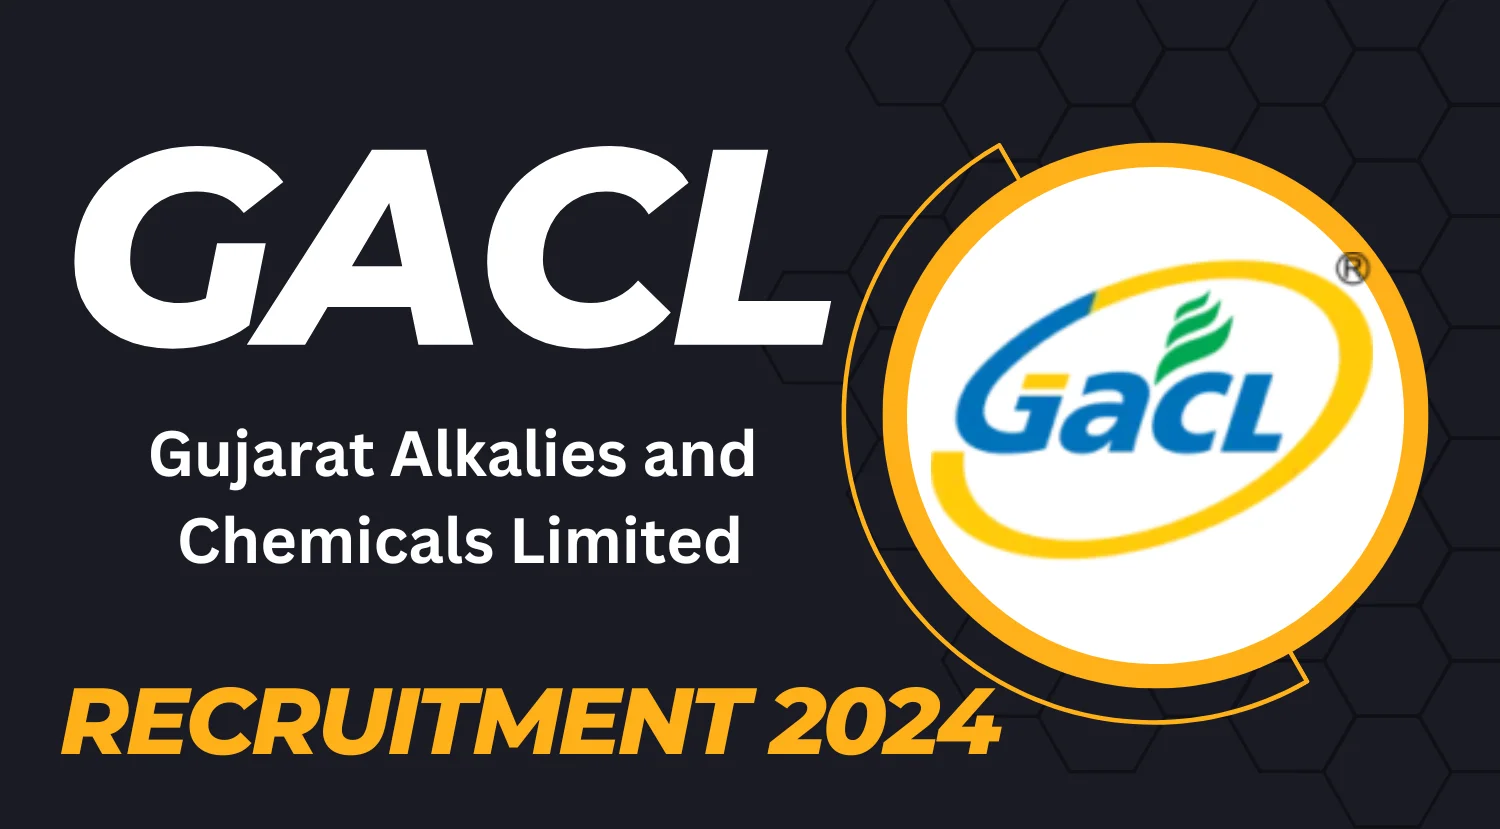 GACL Recruitment 2024